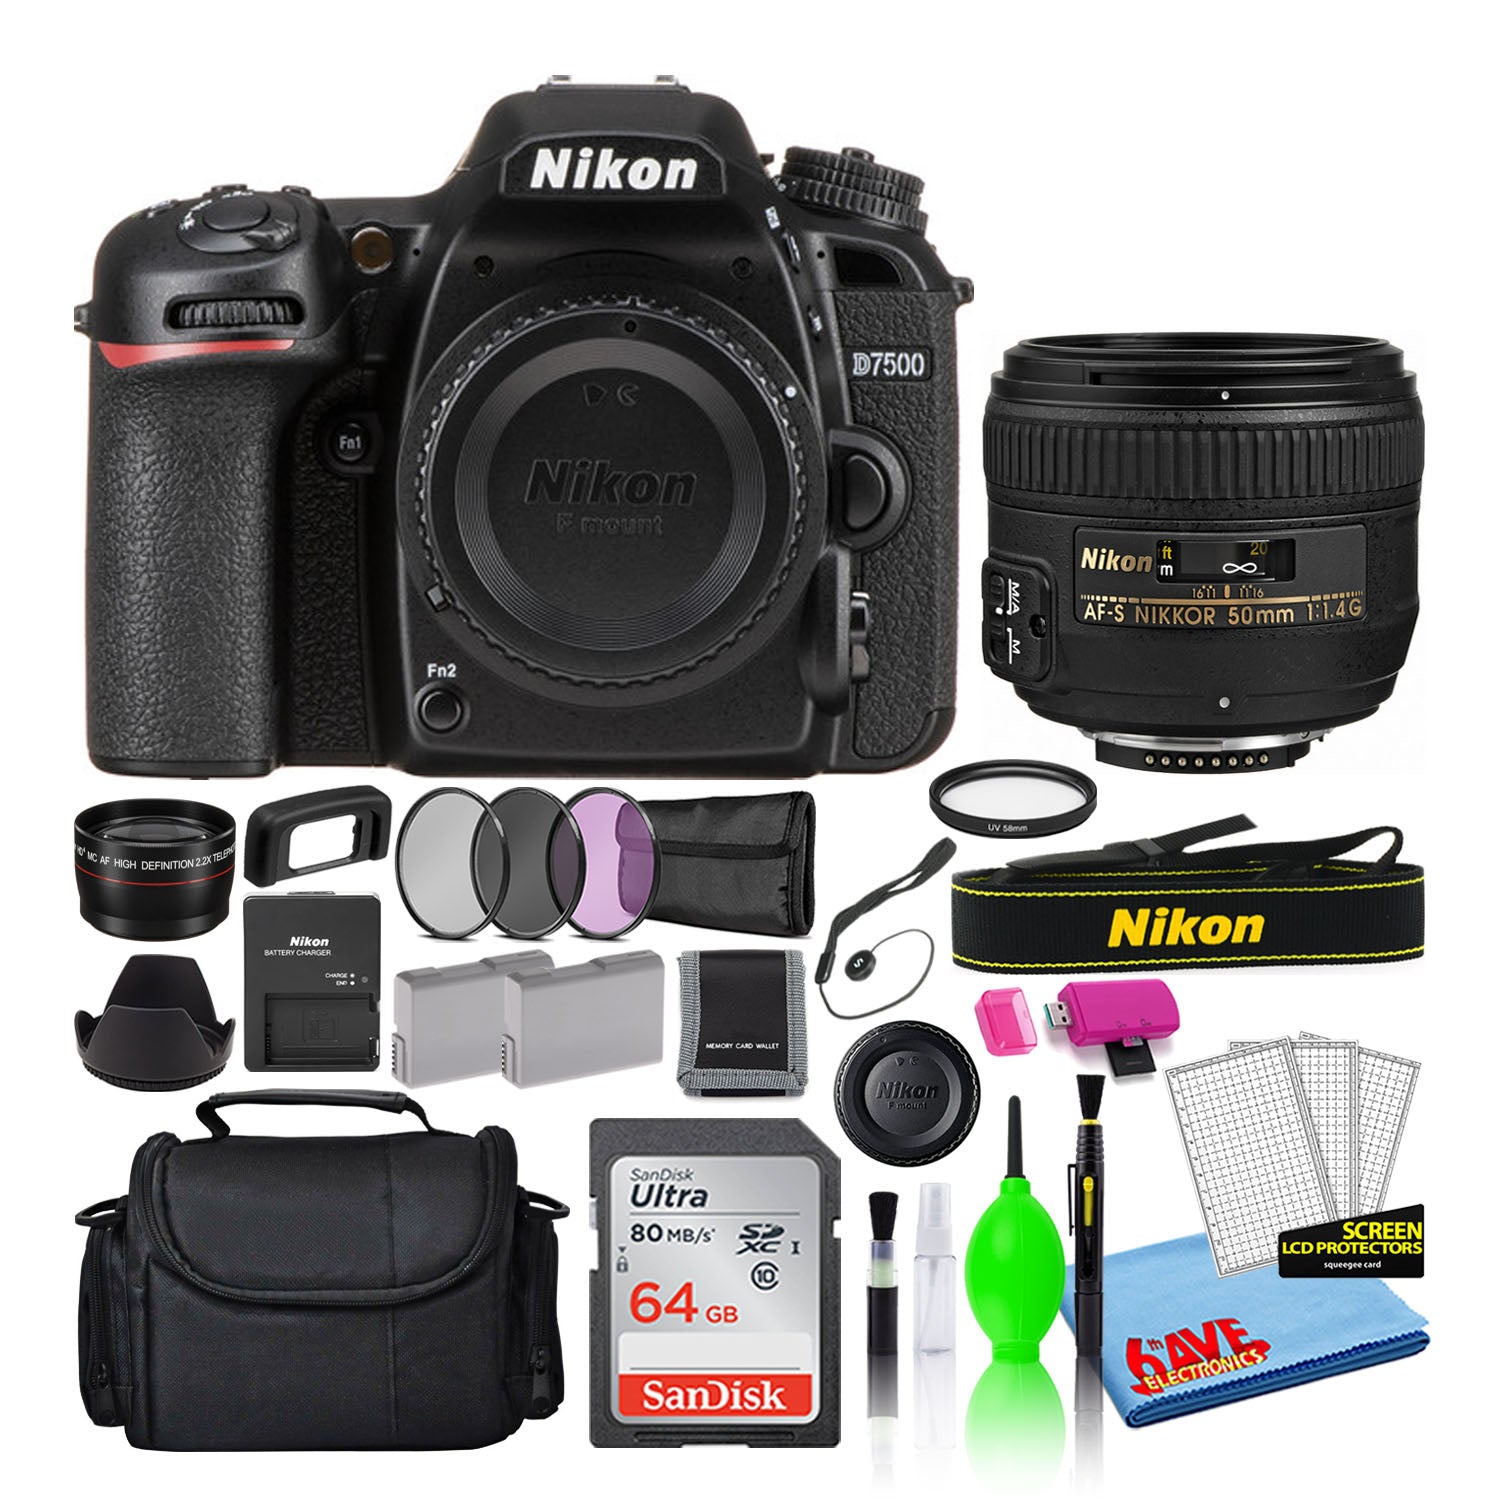 Nikon D7500 Digital Camera with 50mm f/1.4G Lens (1581) + 64GB Card + Bag (Intl)